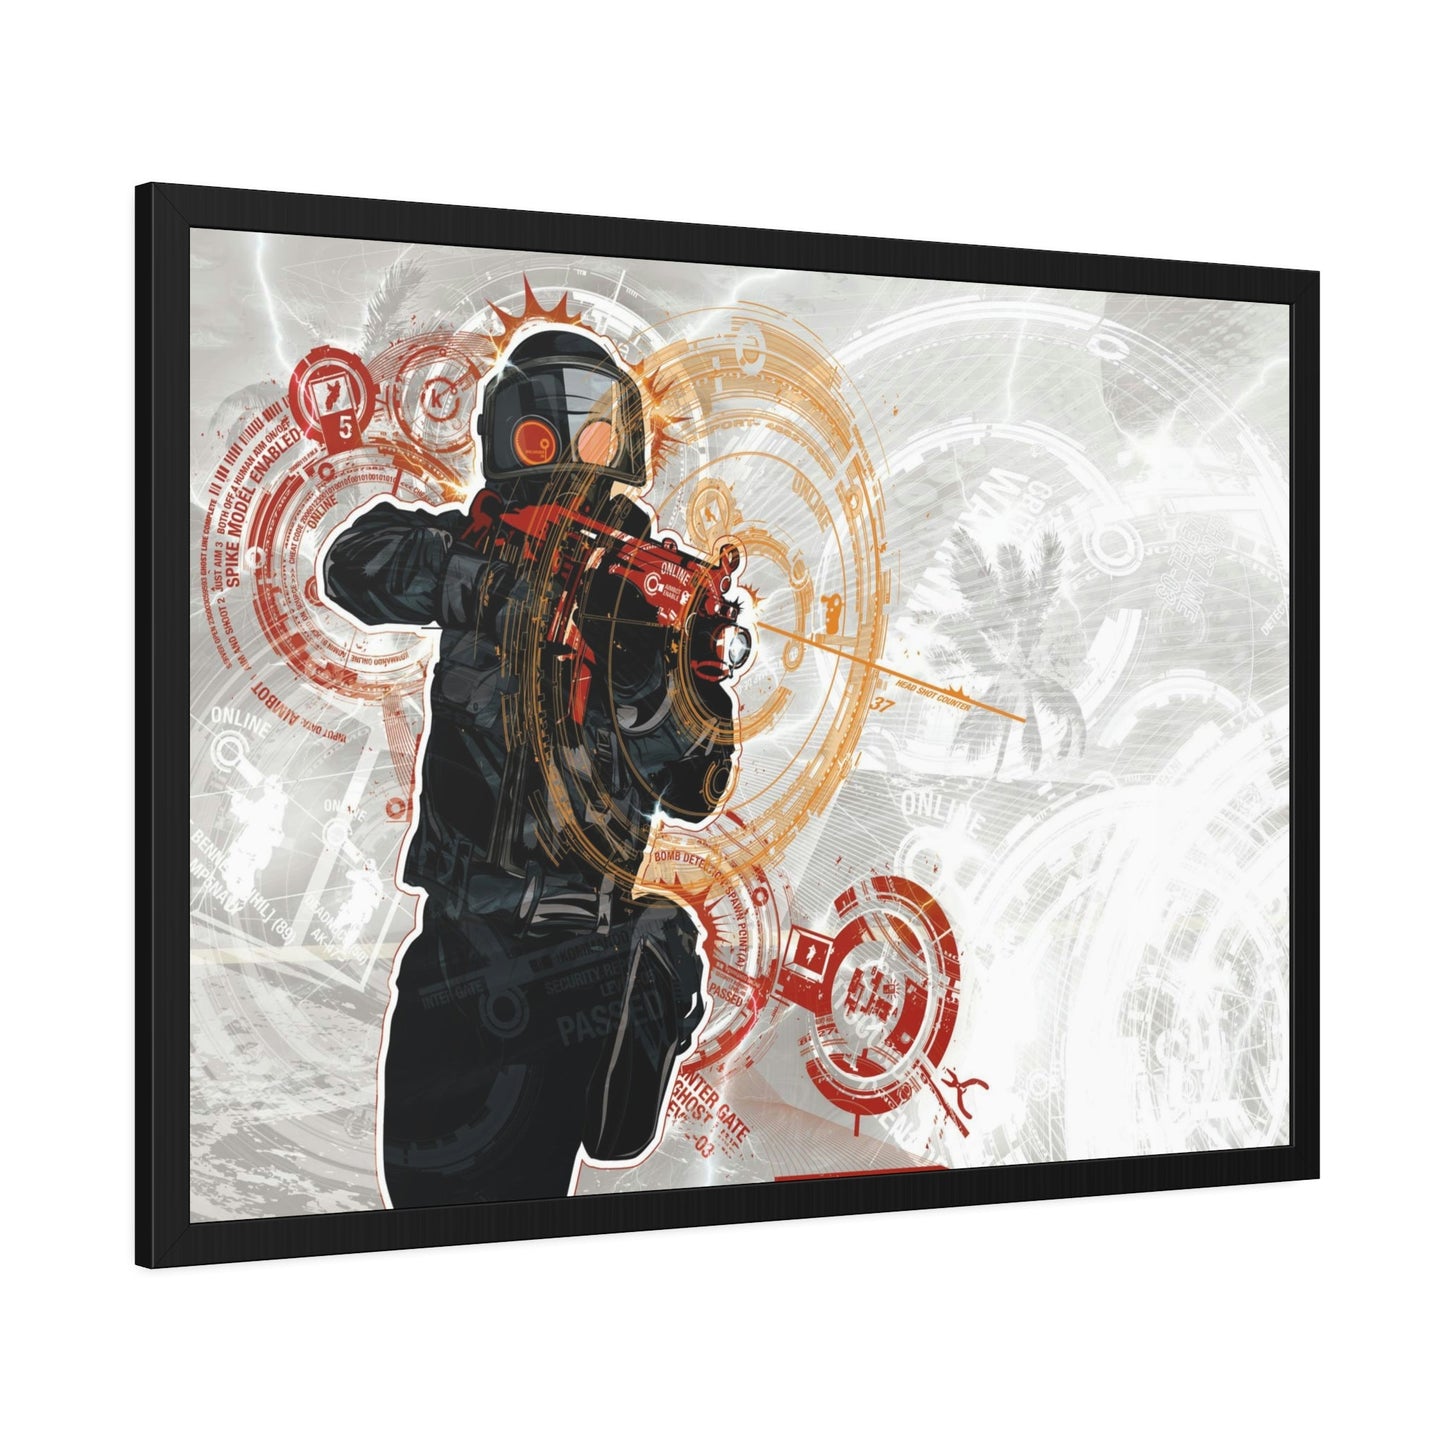 Virtual Warfare: Thrilling Counter Strike Scene in Framed Canvas & Poster